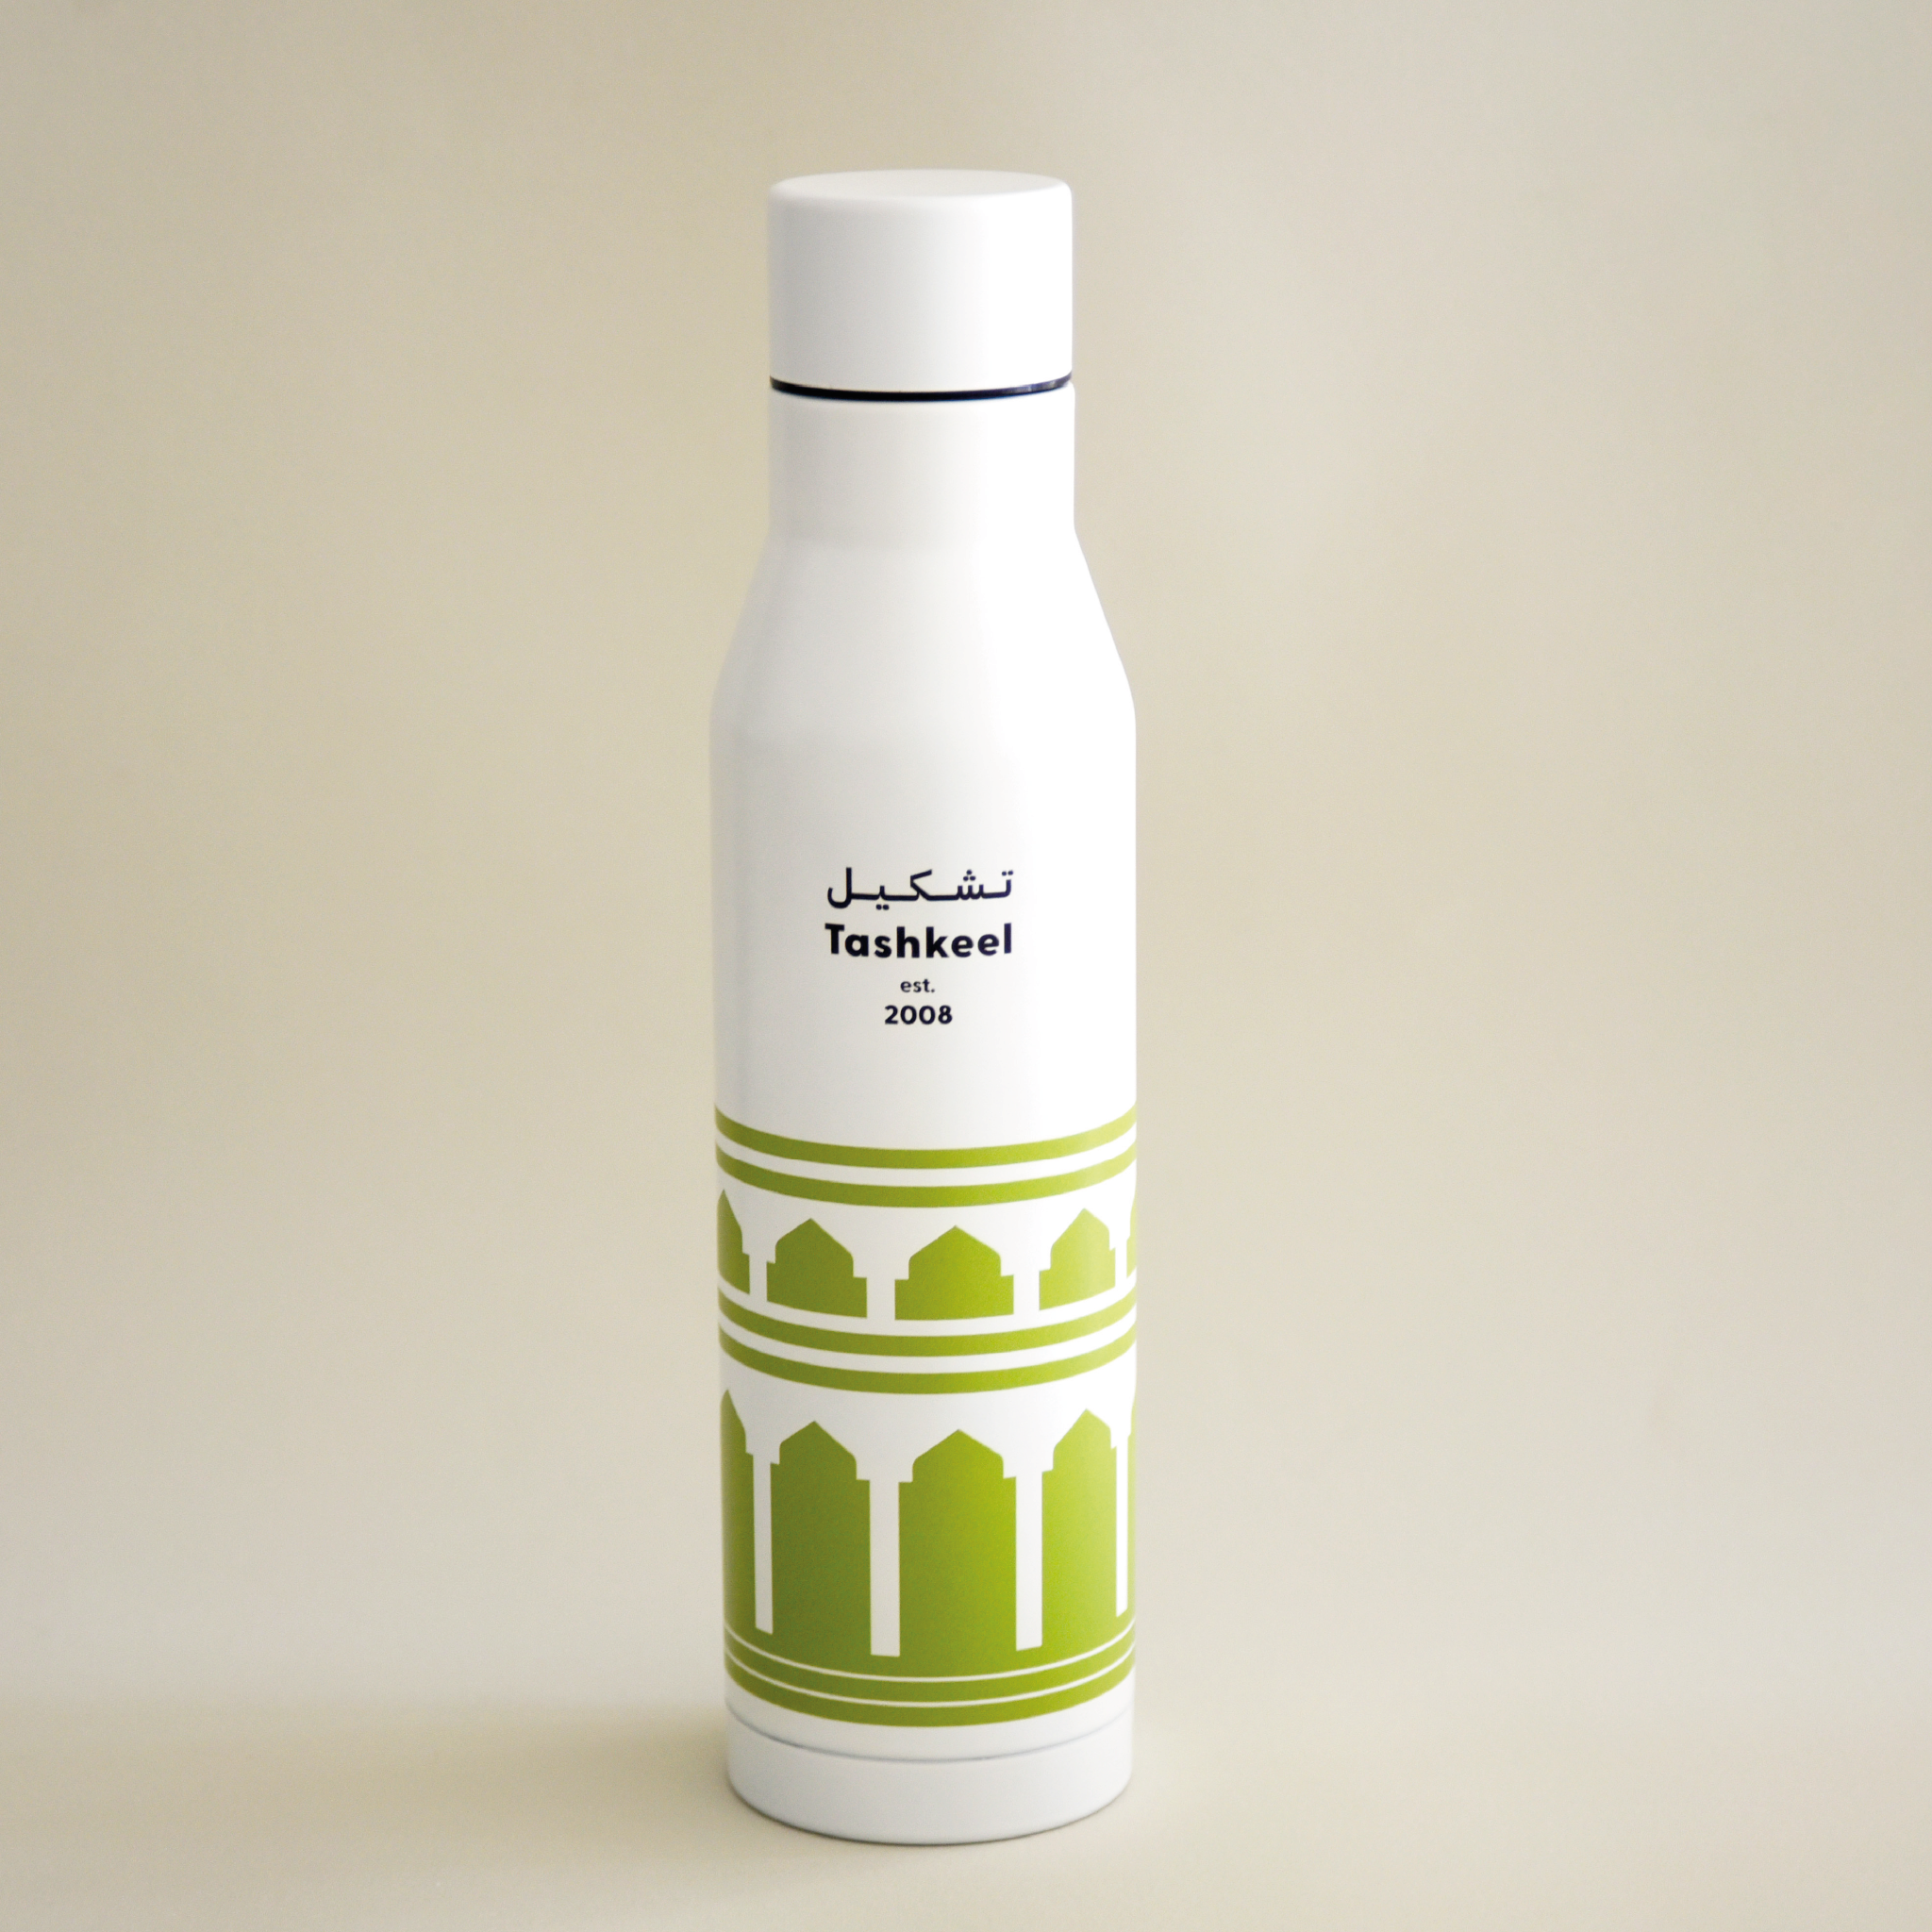 Tashkeel water bottle